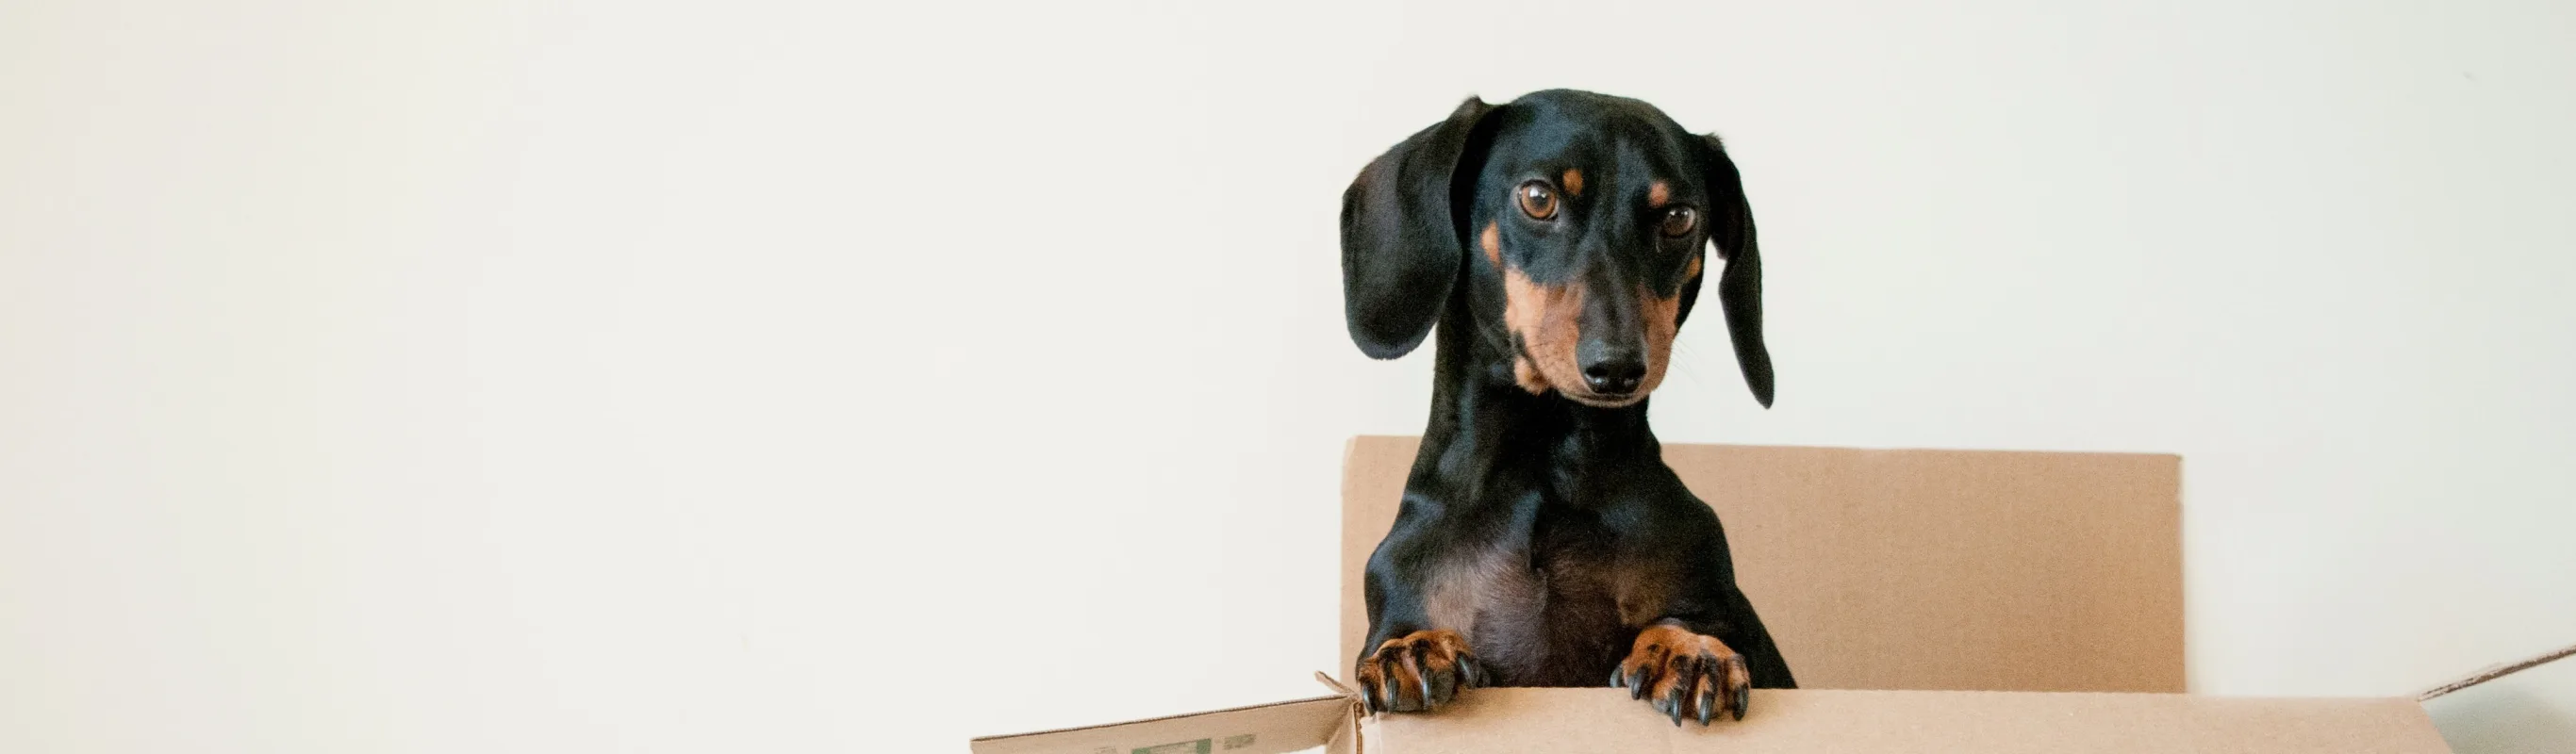 small black dog inside a box